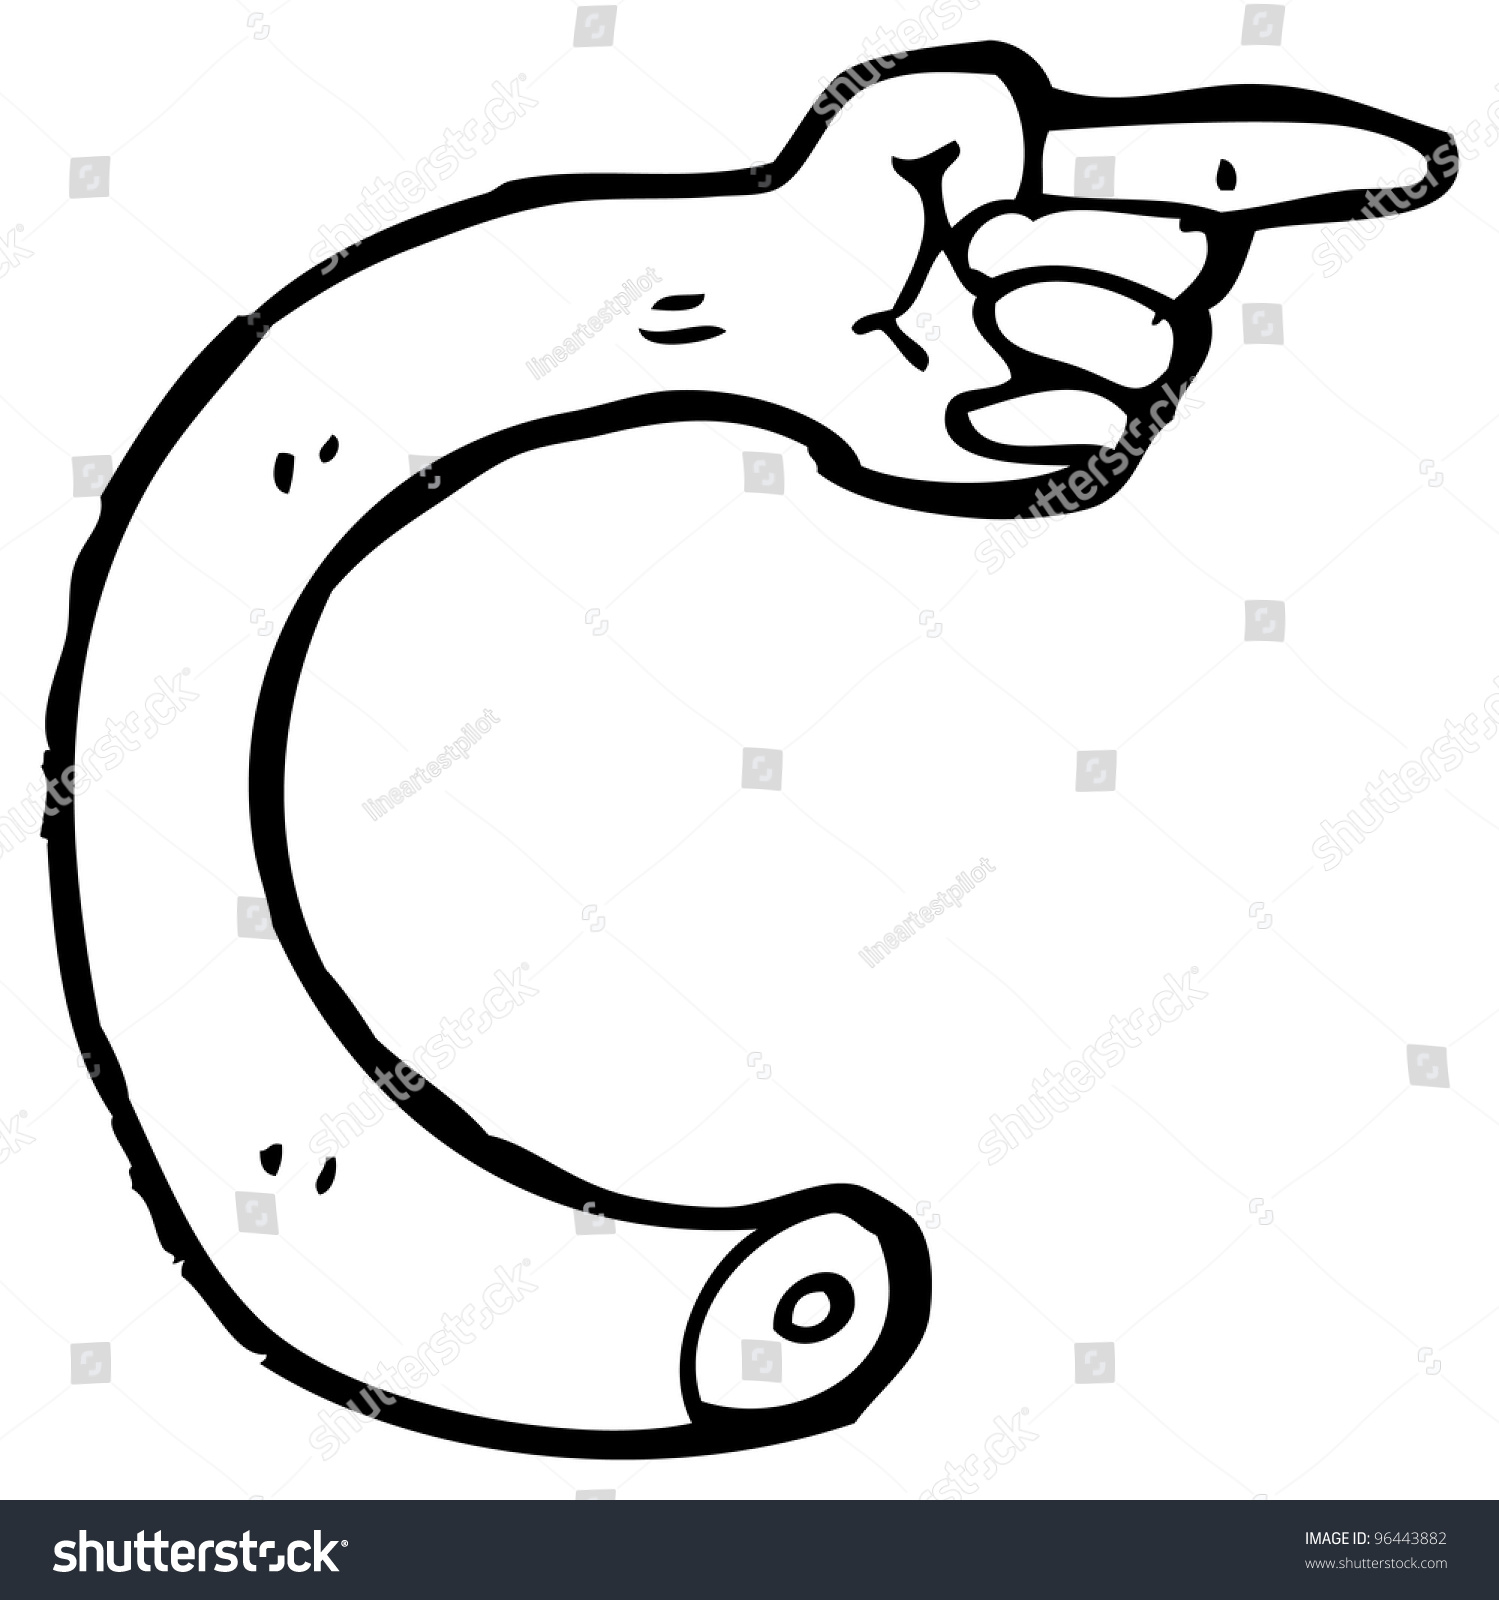 Pointing Arm Cartoon Stock Photo 96443882 : Shutterstock